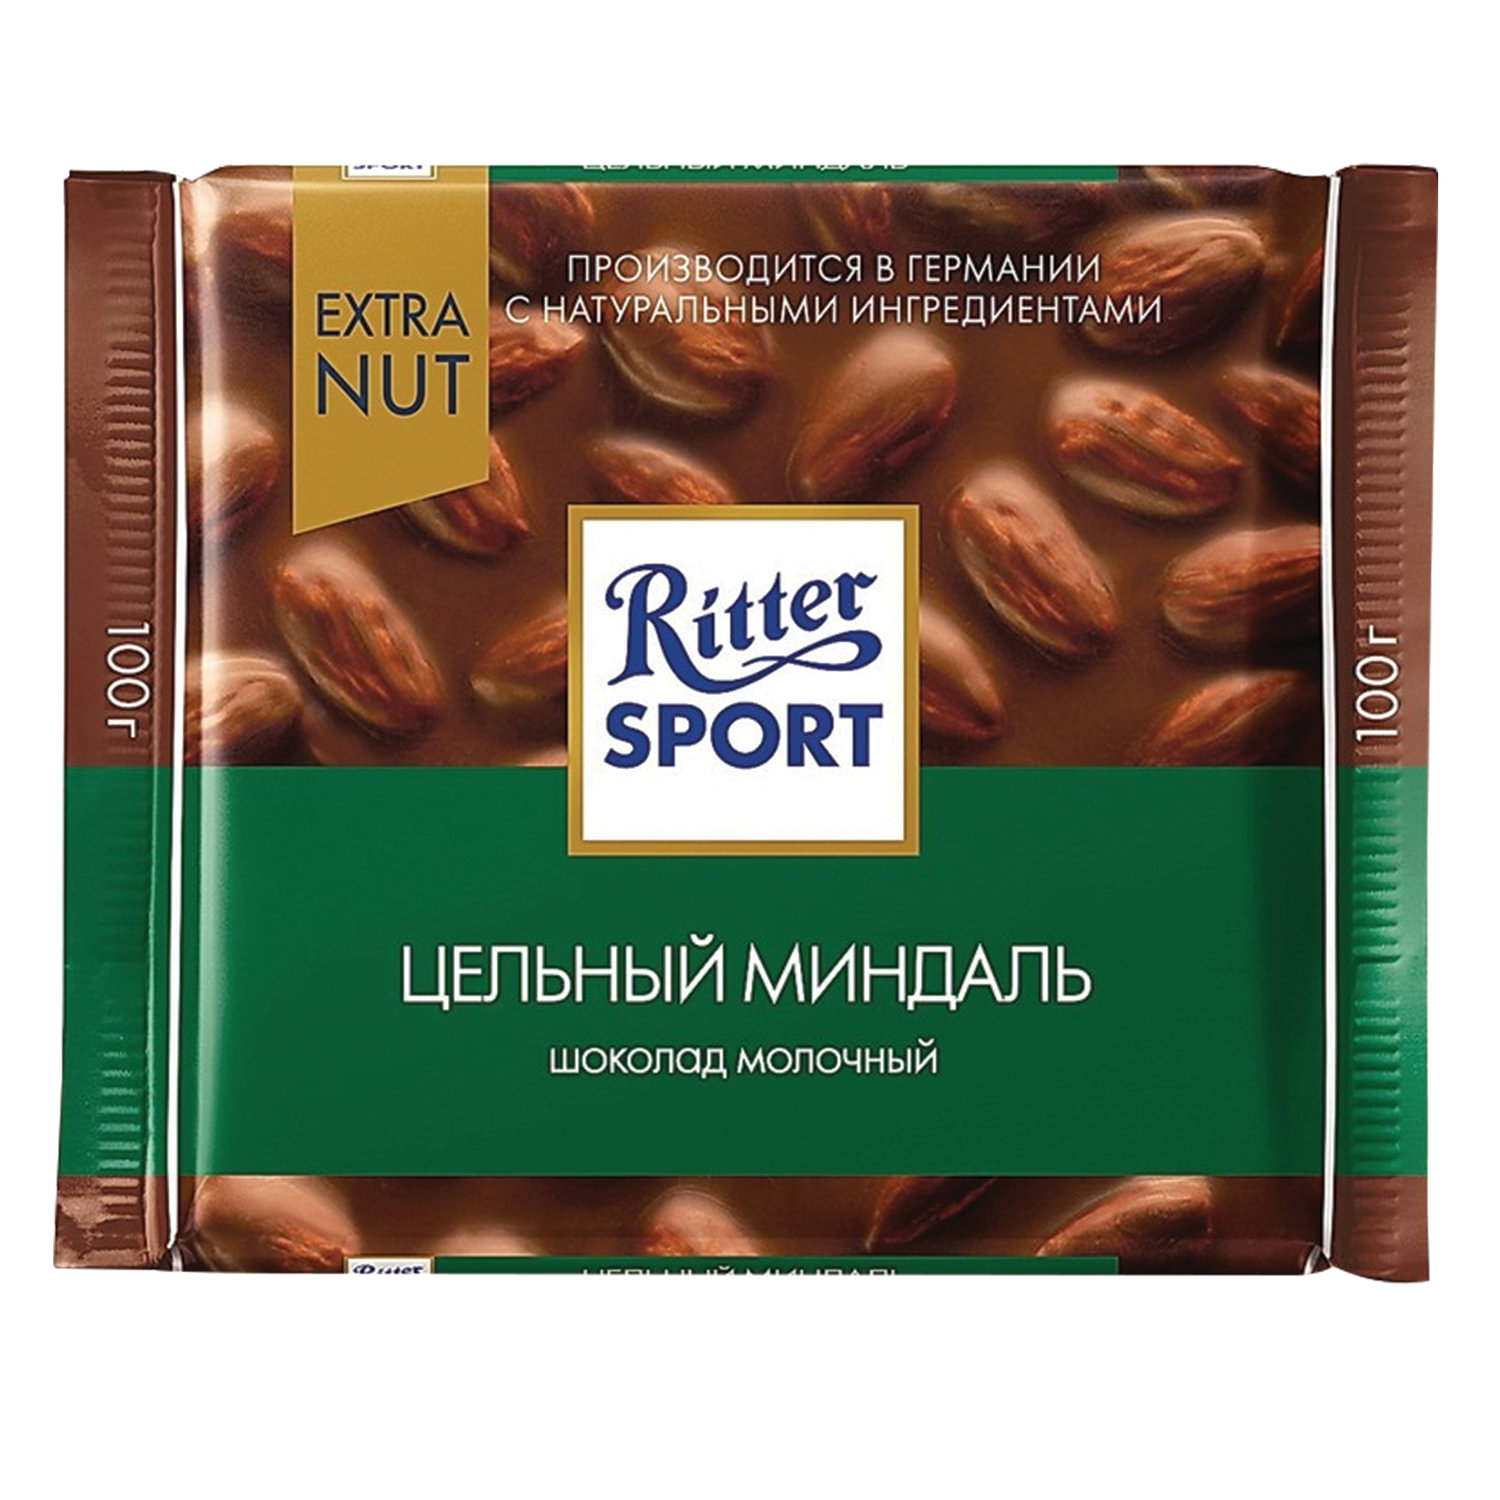 Шоколад молочный Ritter Sport цельный миндаль, 100г